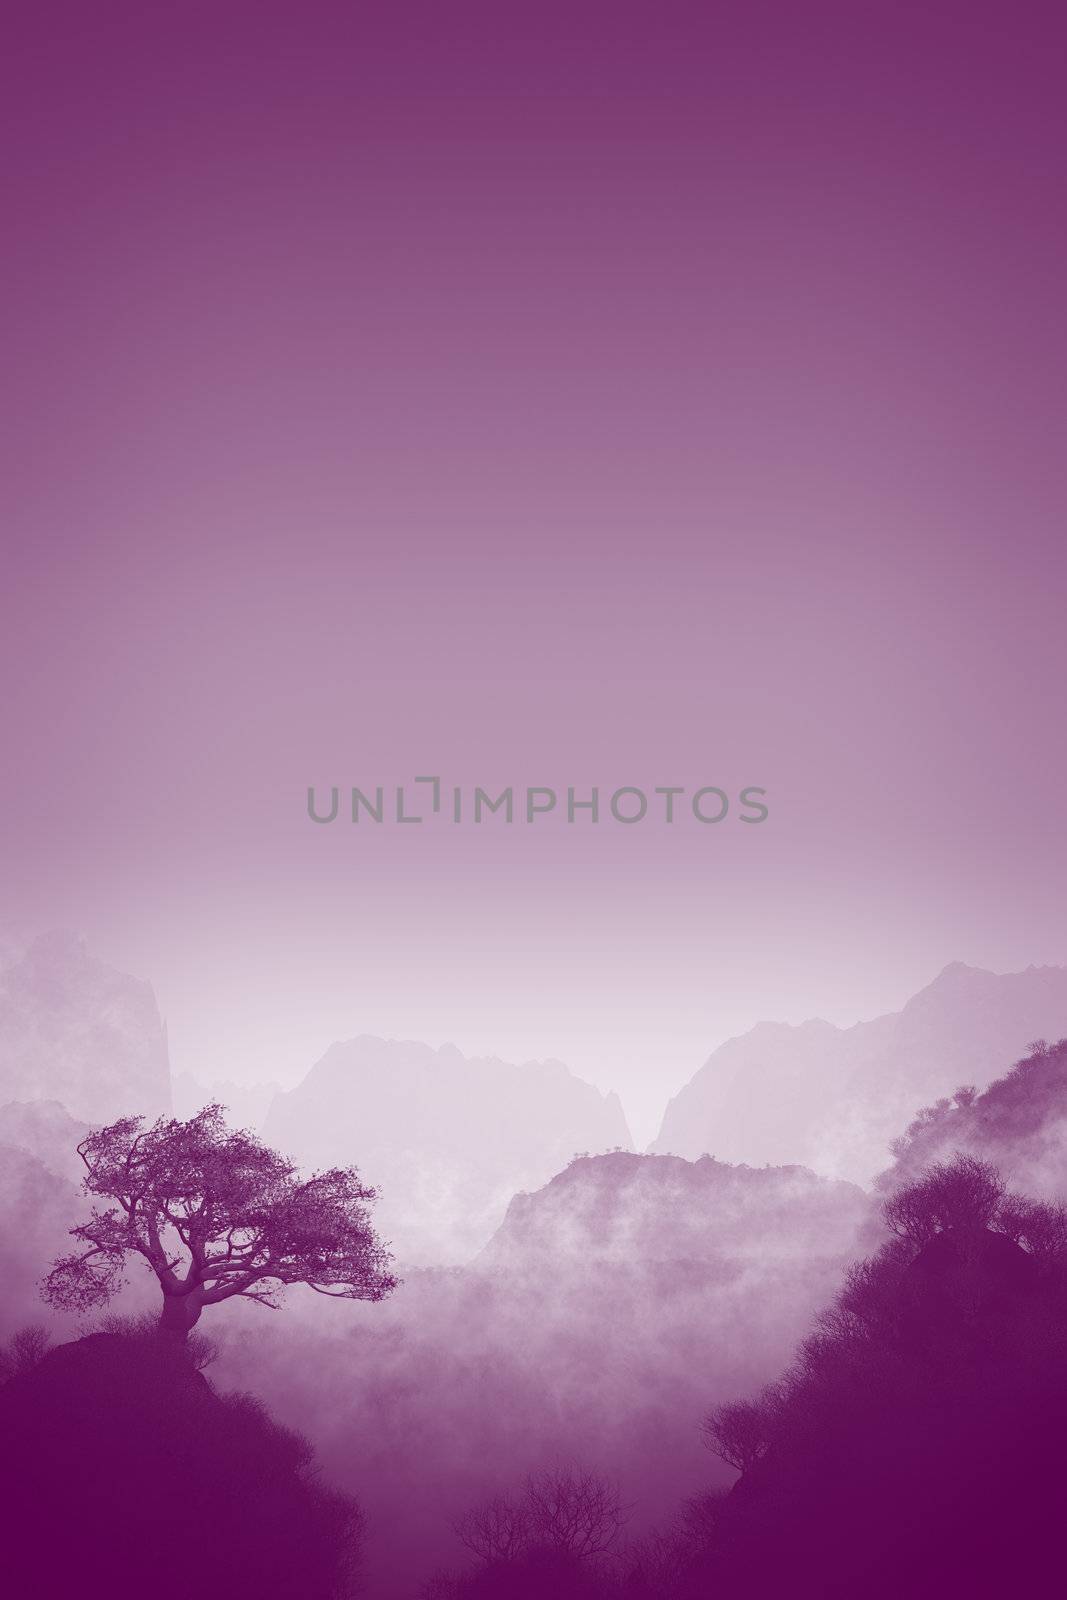 An image of a nice purple landscape